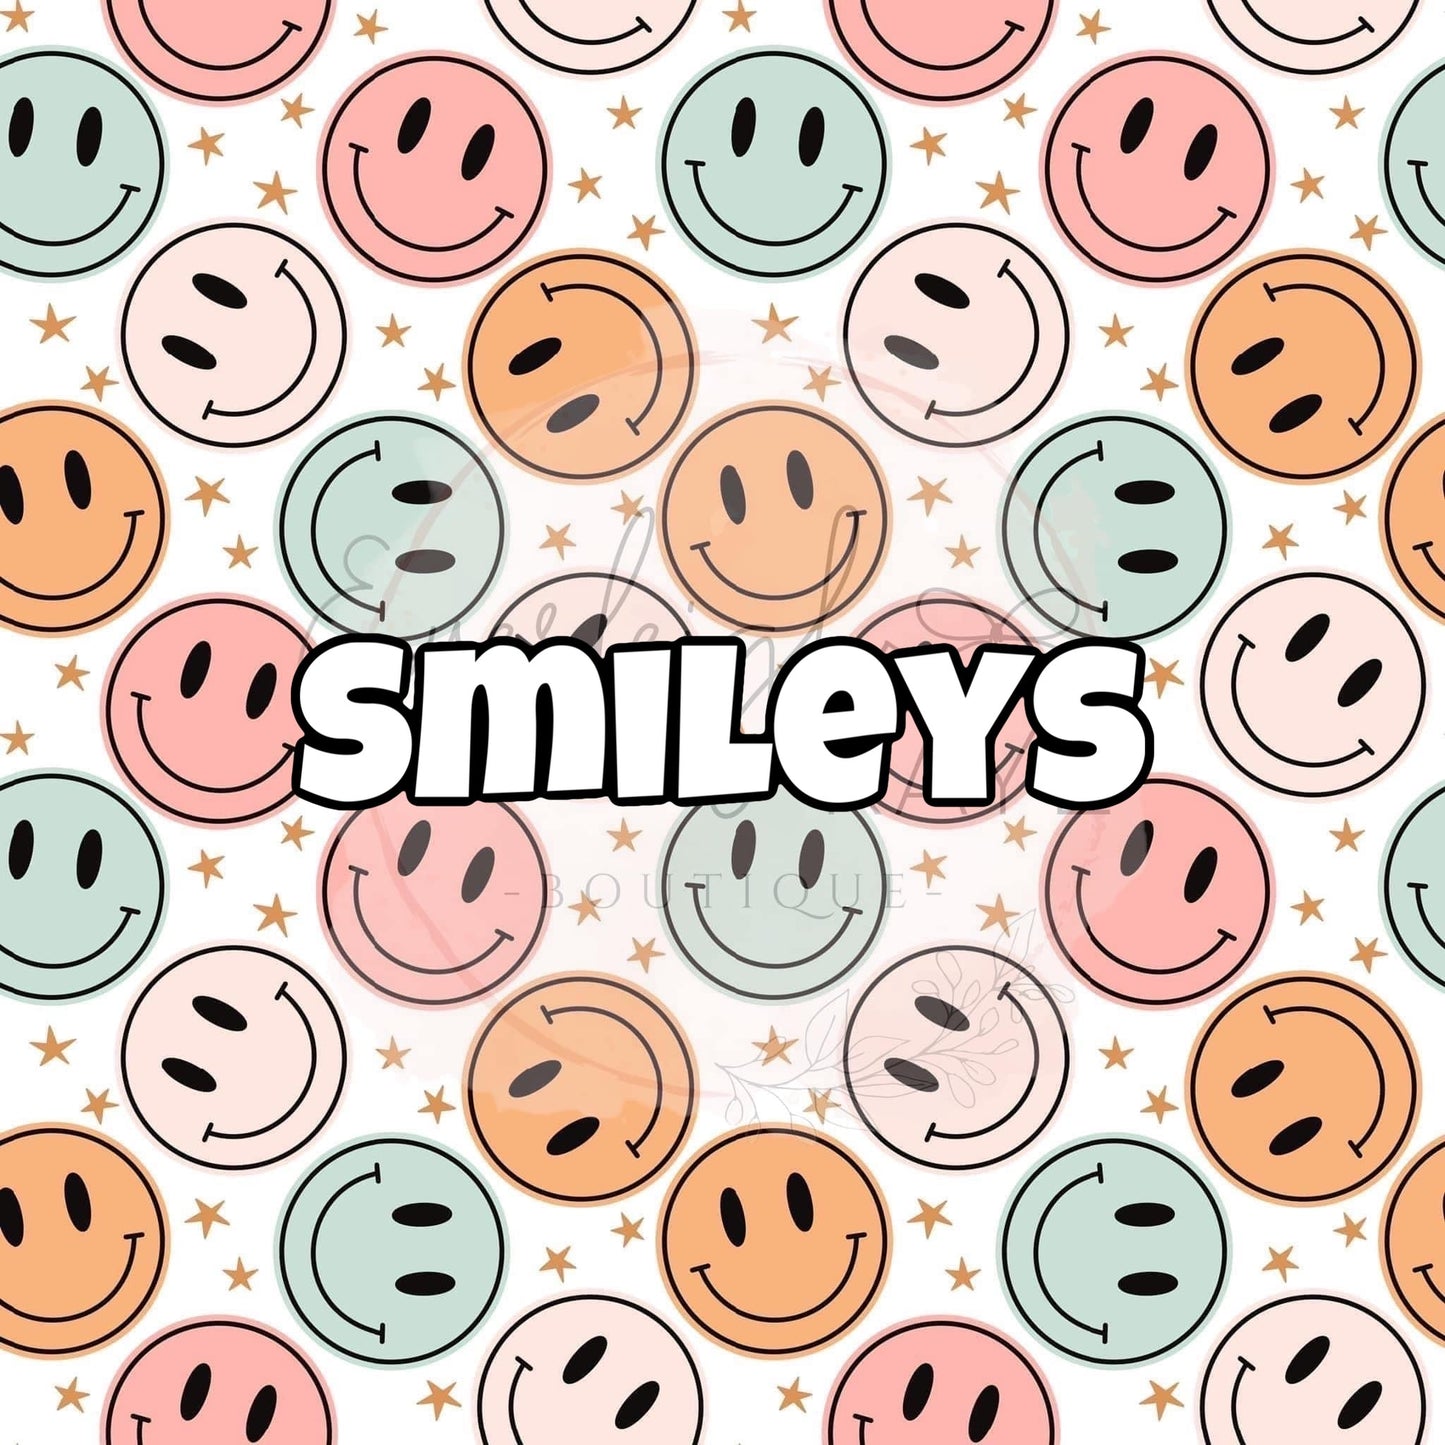 SMILEYS